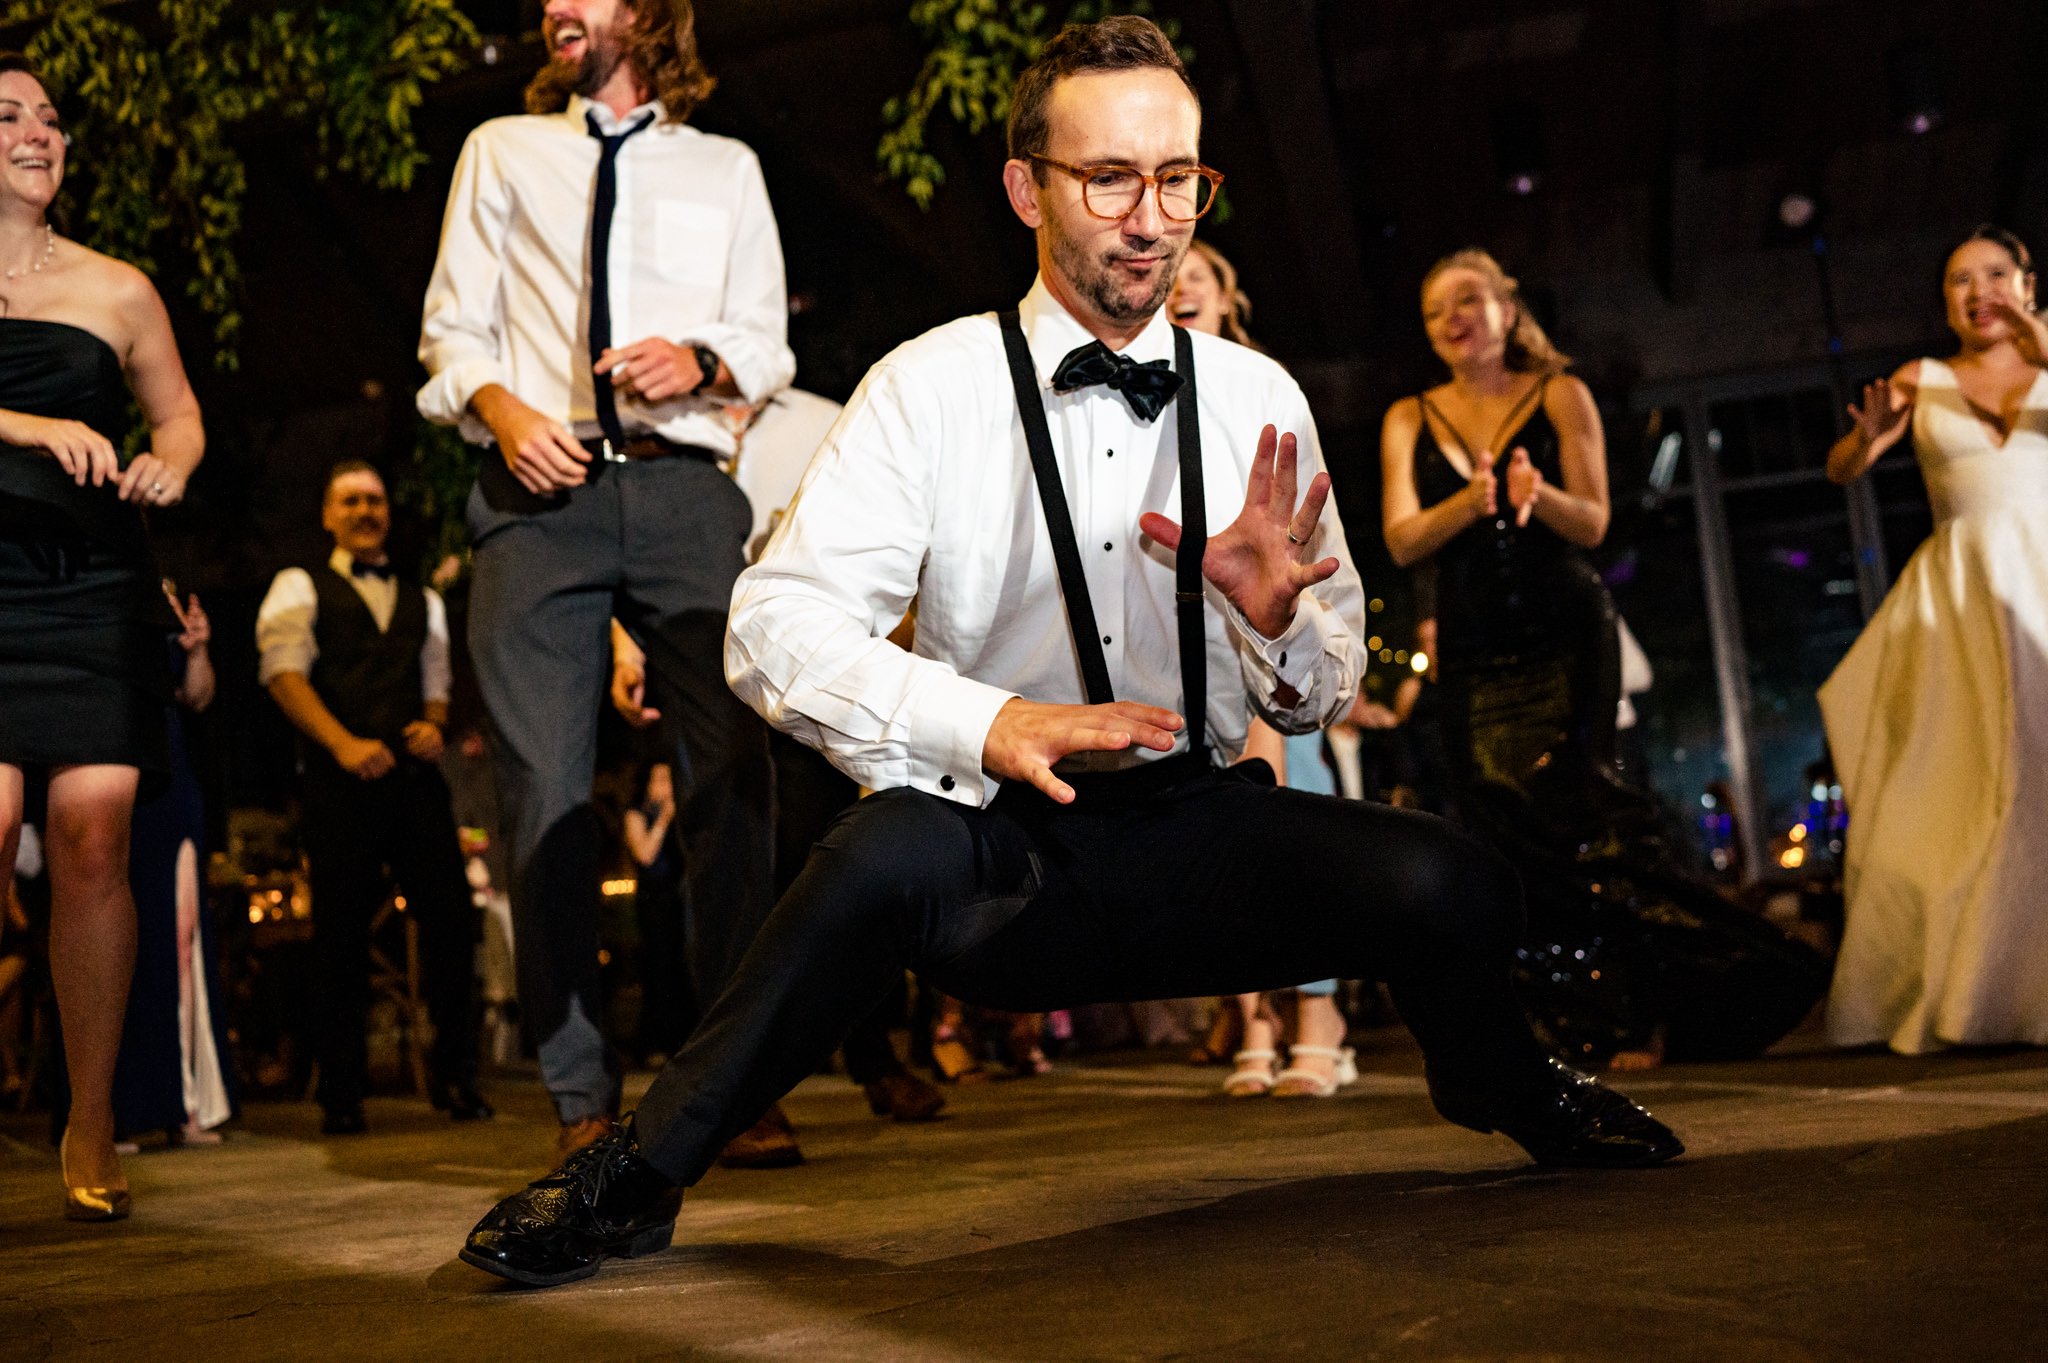 A man in a tuxedo dancing at a farm wedding.